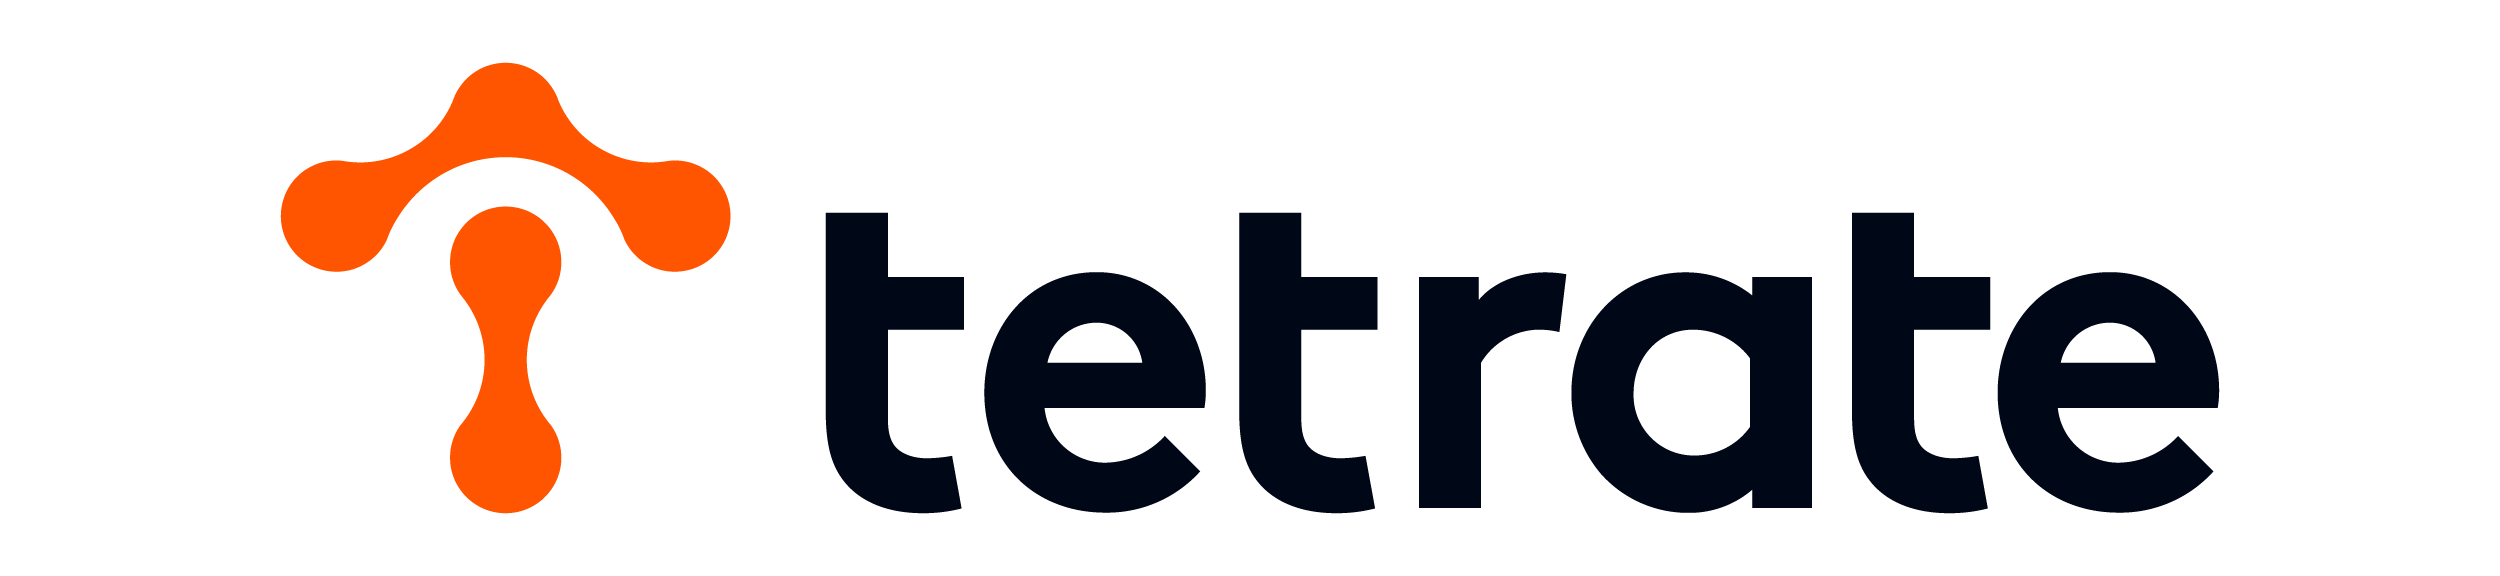 Tetrate-logo-full-color-RGB-01